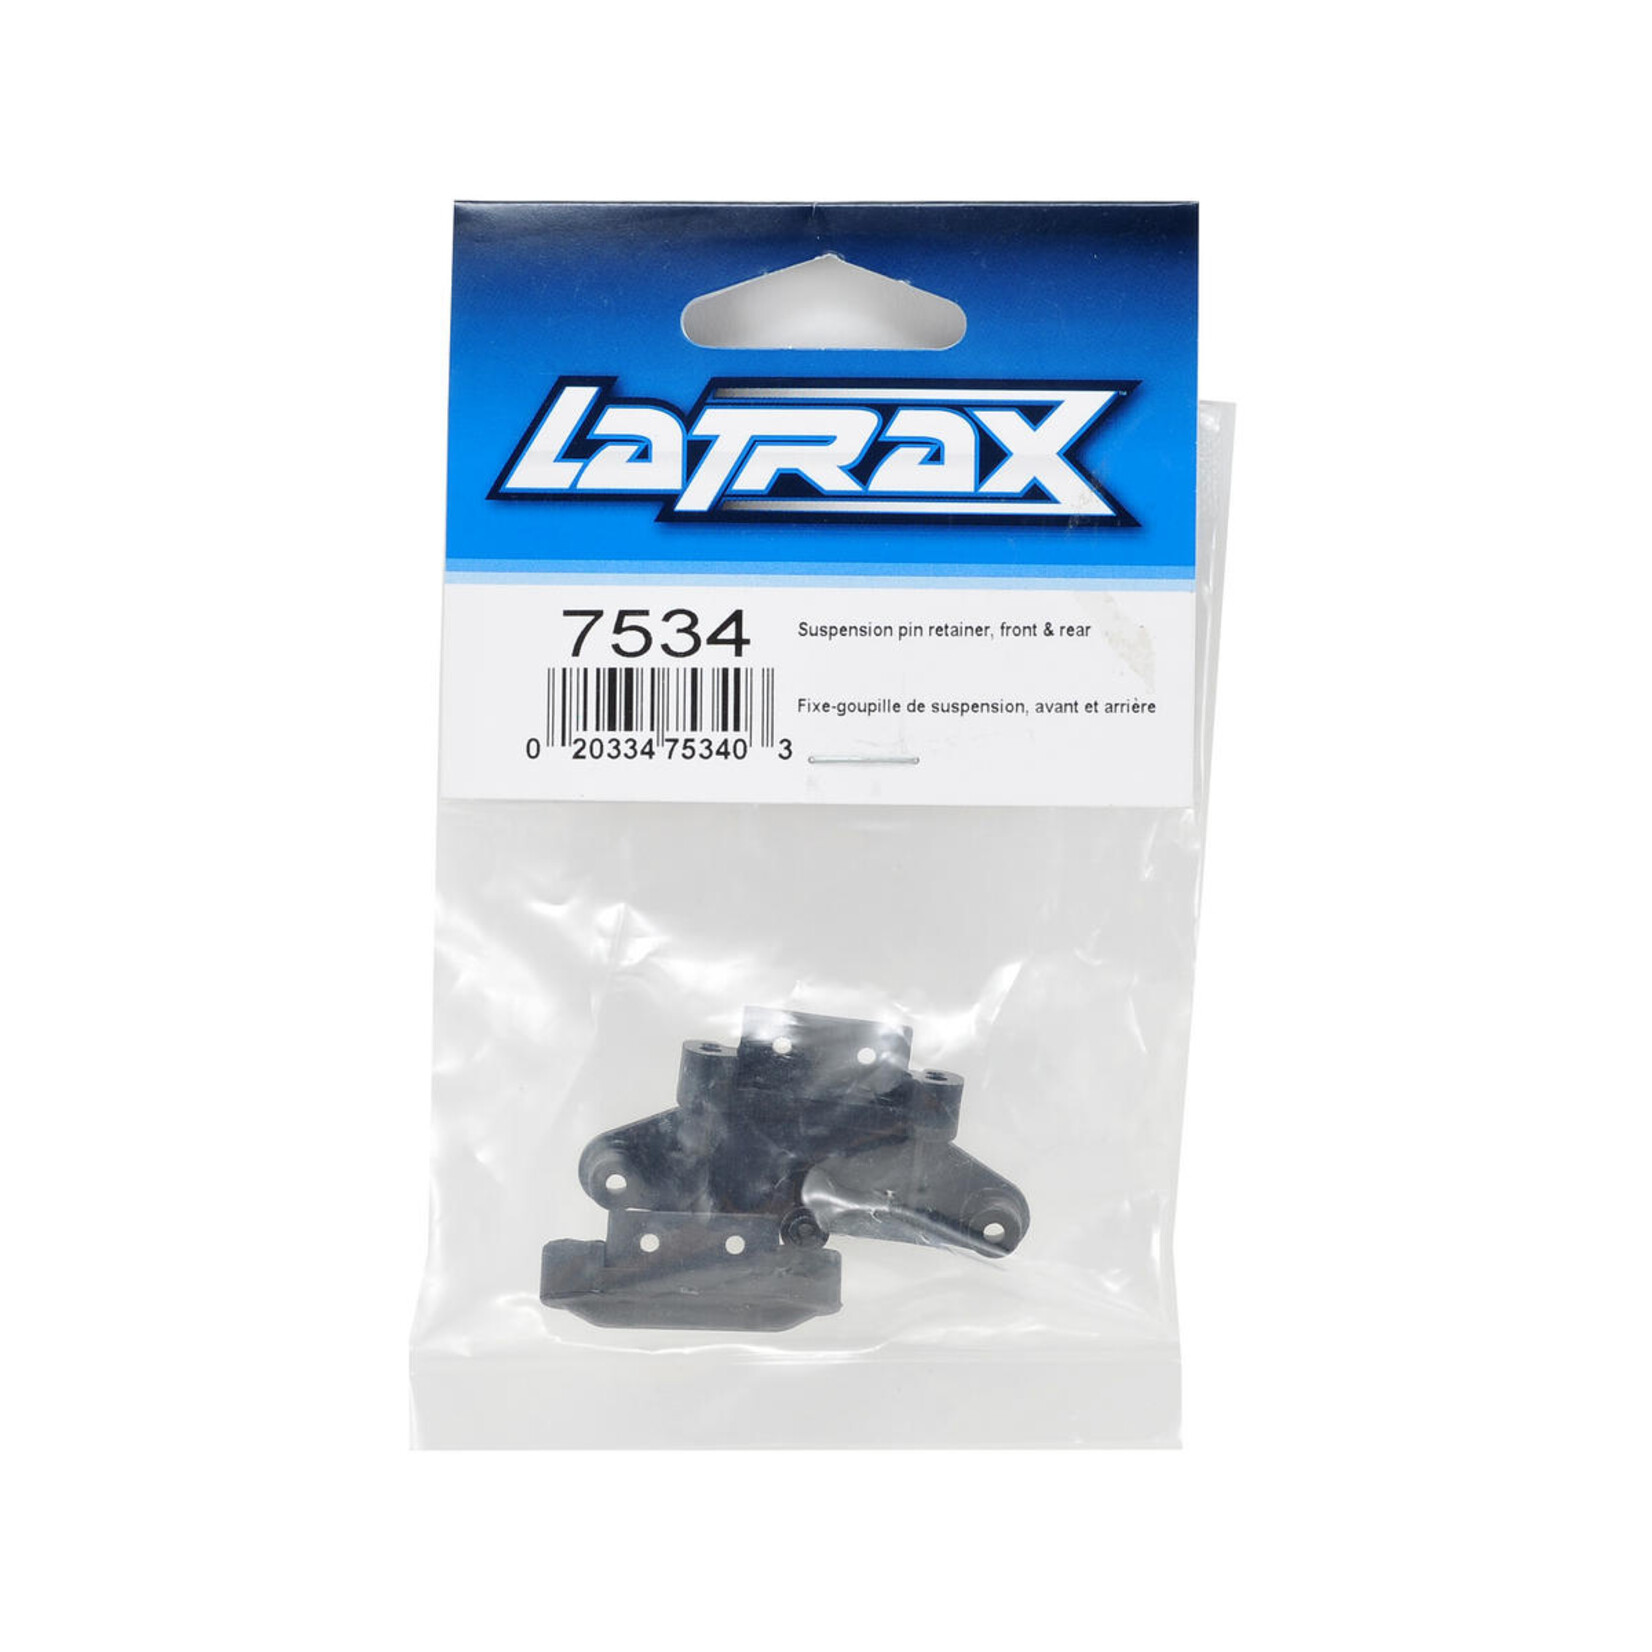 Traxxas Traxxas LaTrax Front & Rear Suspension Pin Retainer #7534